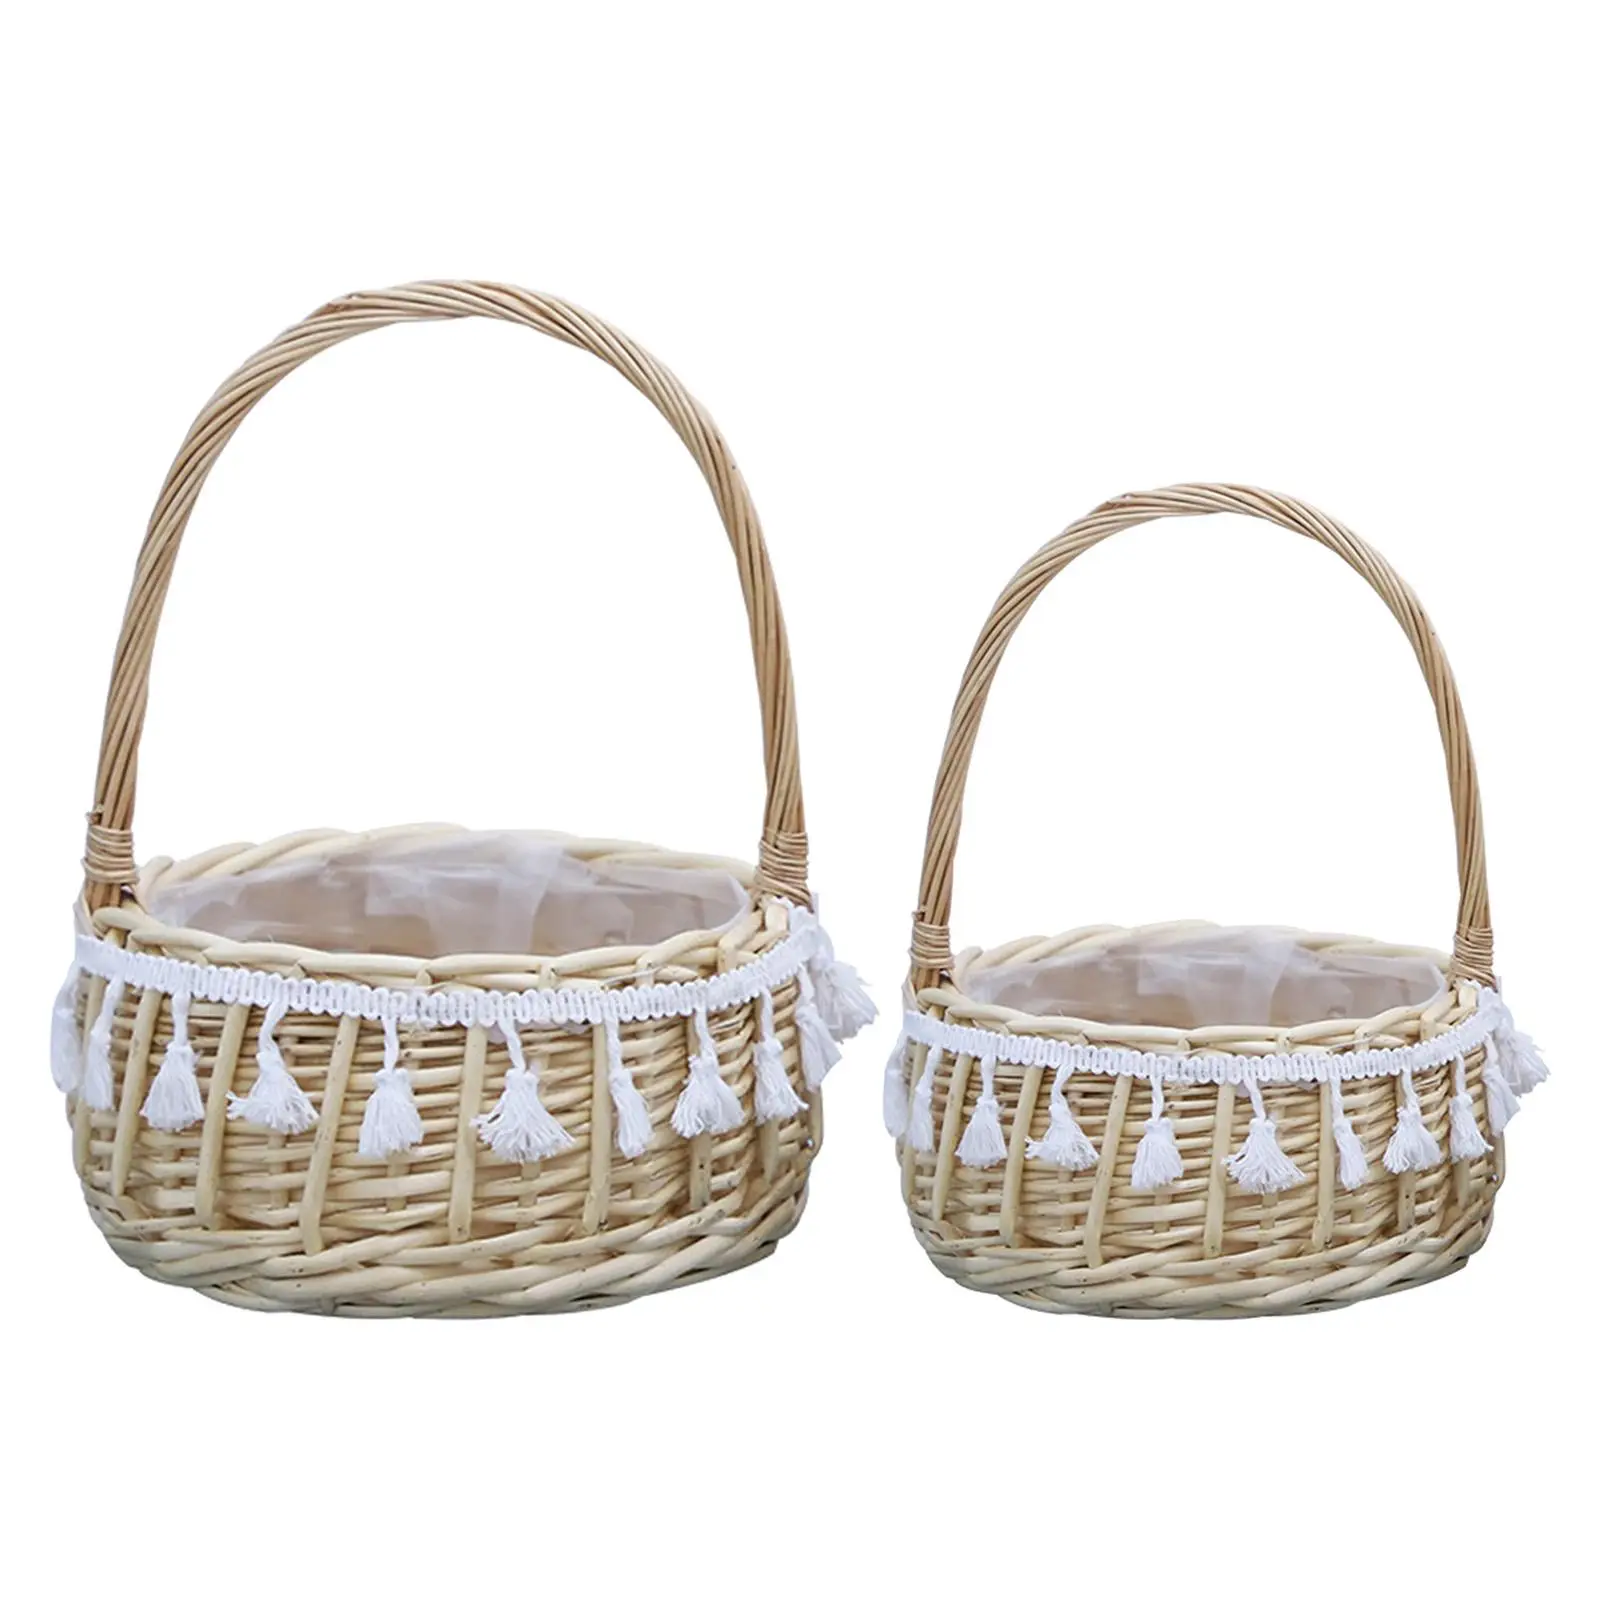 Storage Basket with Handles Flower Girl Baskets for Flower Arrangement